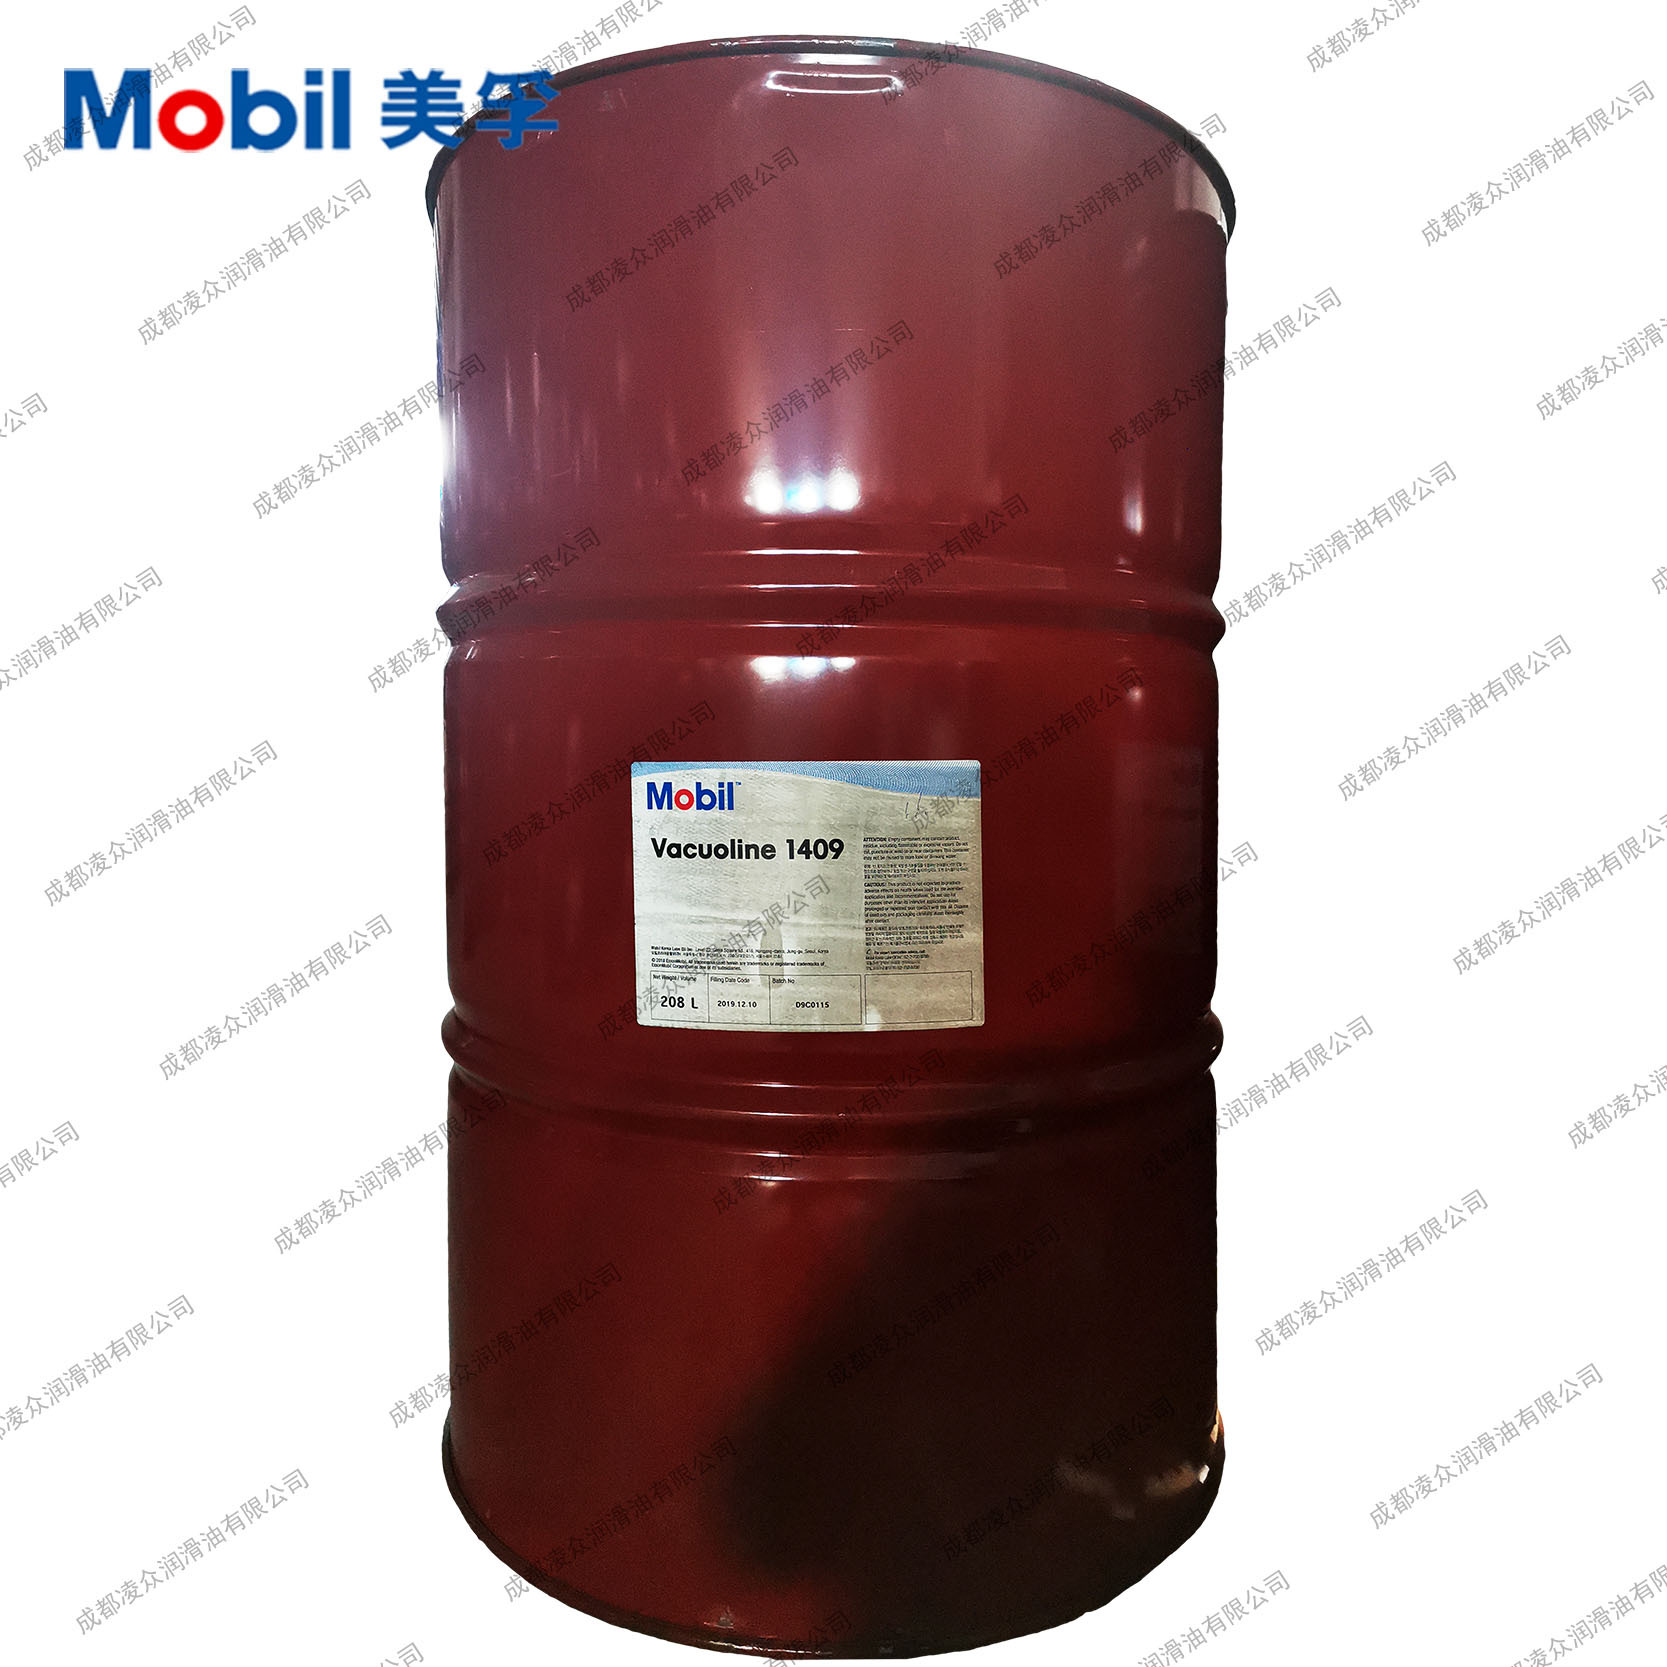 M|obil Vacuoline 1409 美|孚威格力1409 ISO VG68液压导轨润滑油